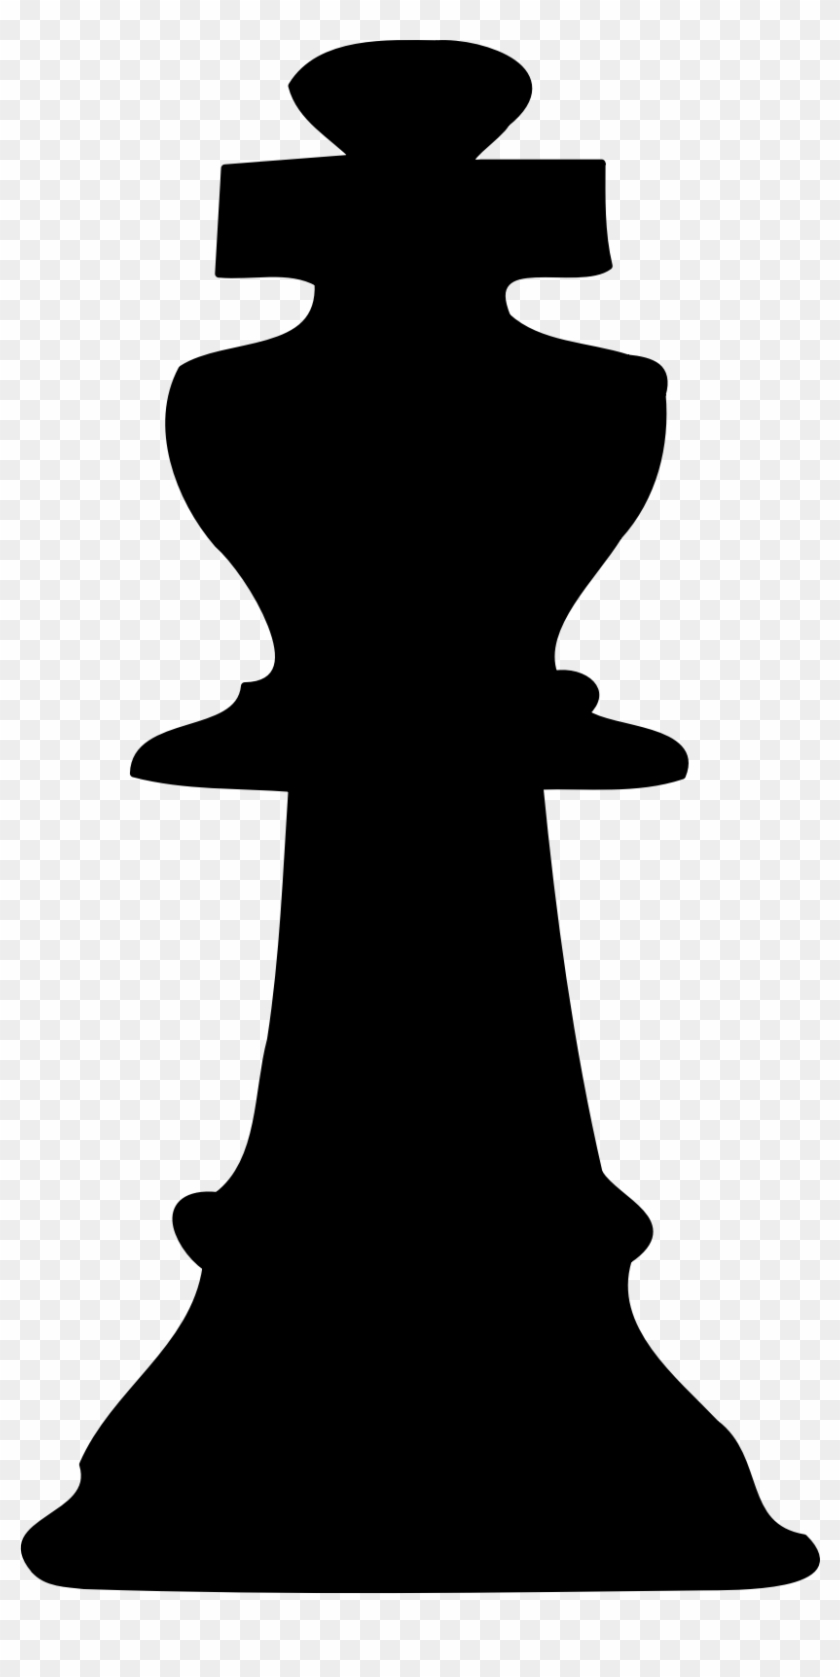 Big Image - King Chess Piece Silhouette #301213